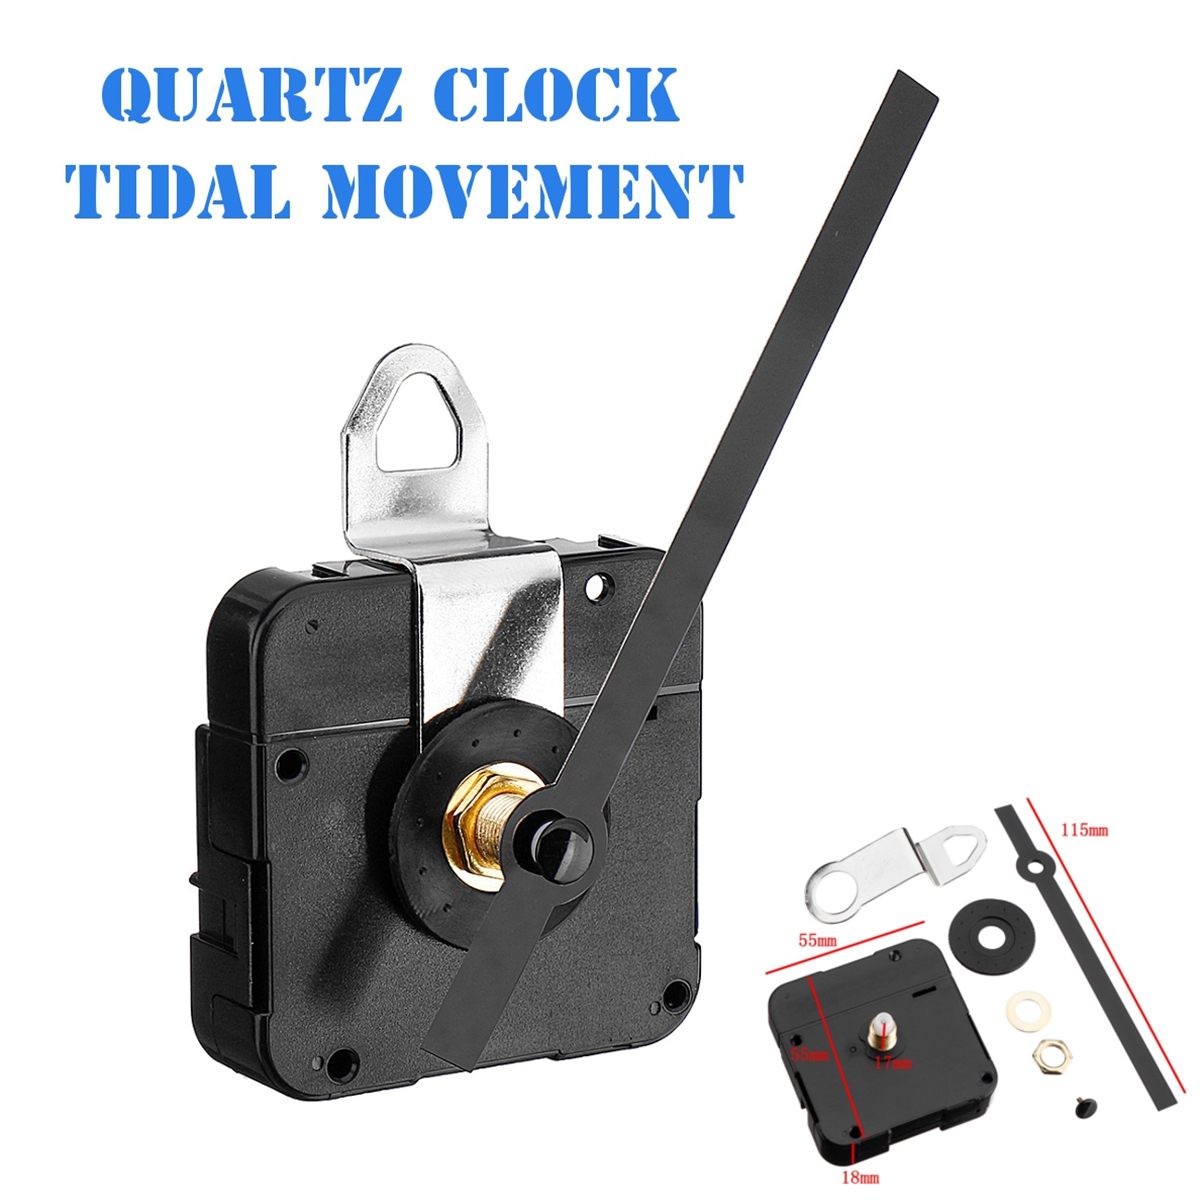 17mm-Quartz-Controlled-Clock-Movement-Motor-Mechanism-115mm-Hands-Fittings-1353046-9